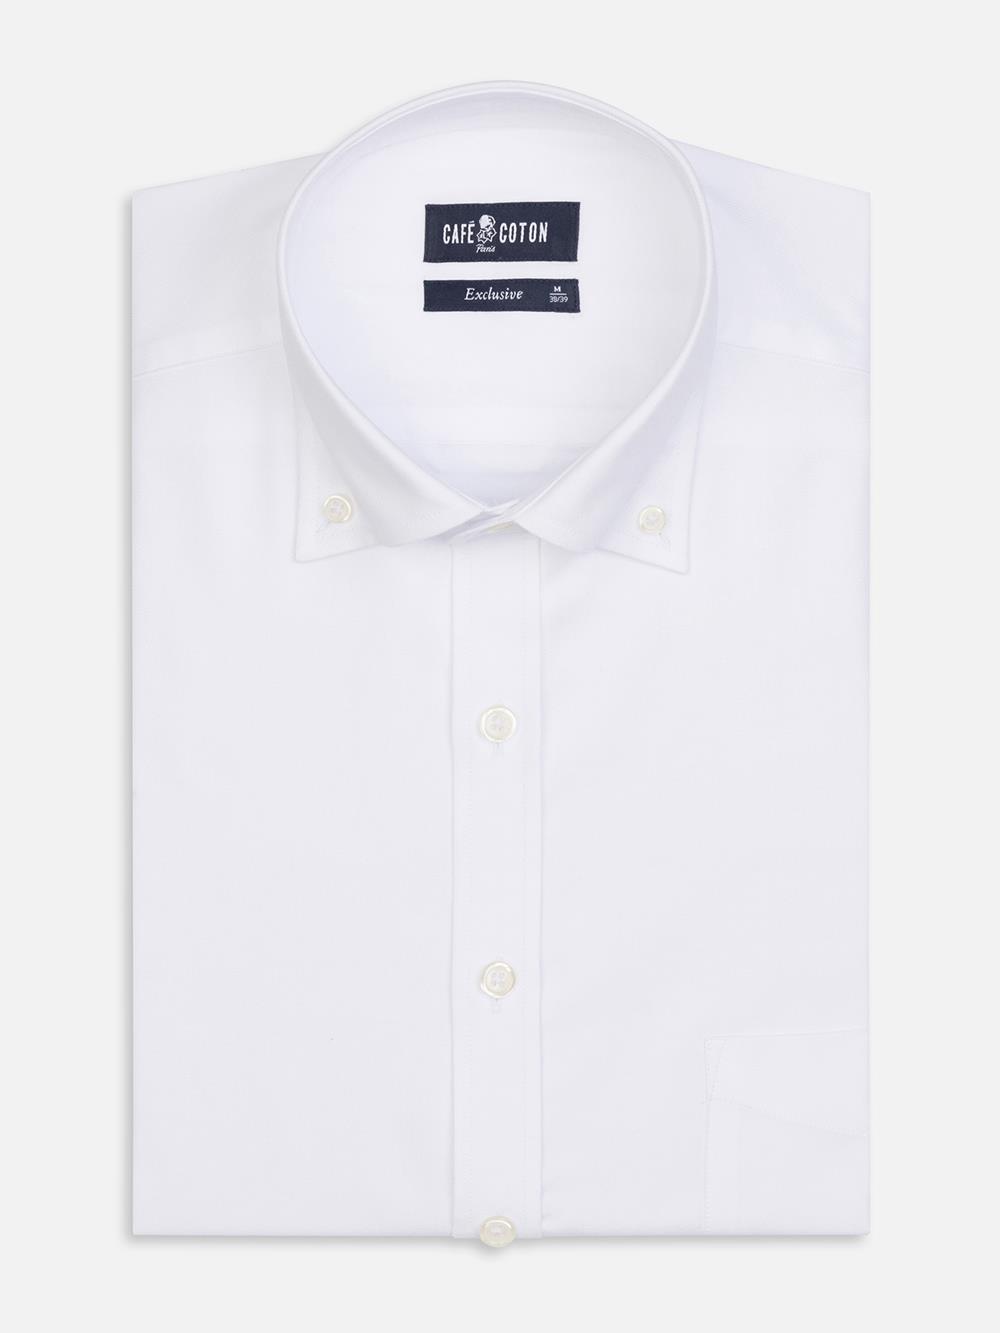 White oxford shirt - Button down collar